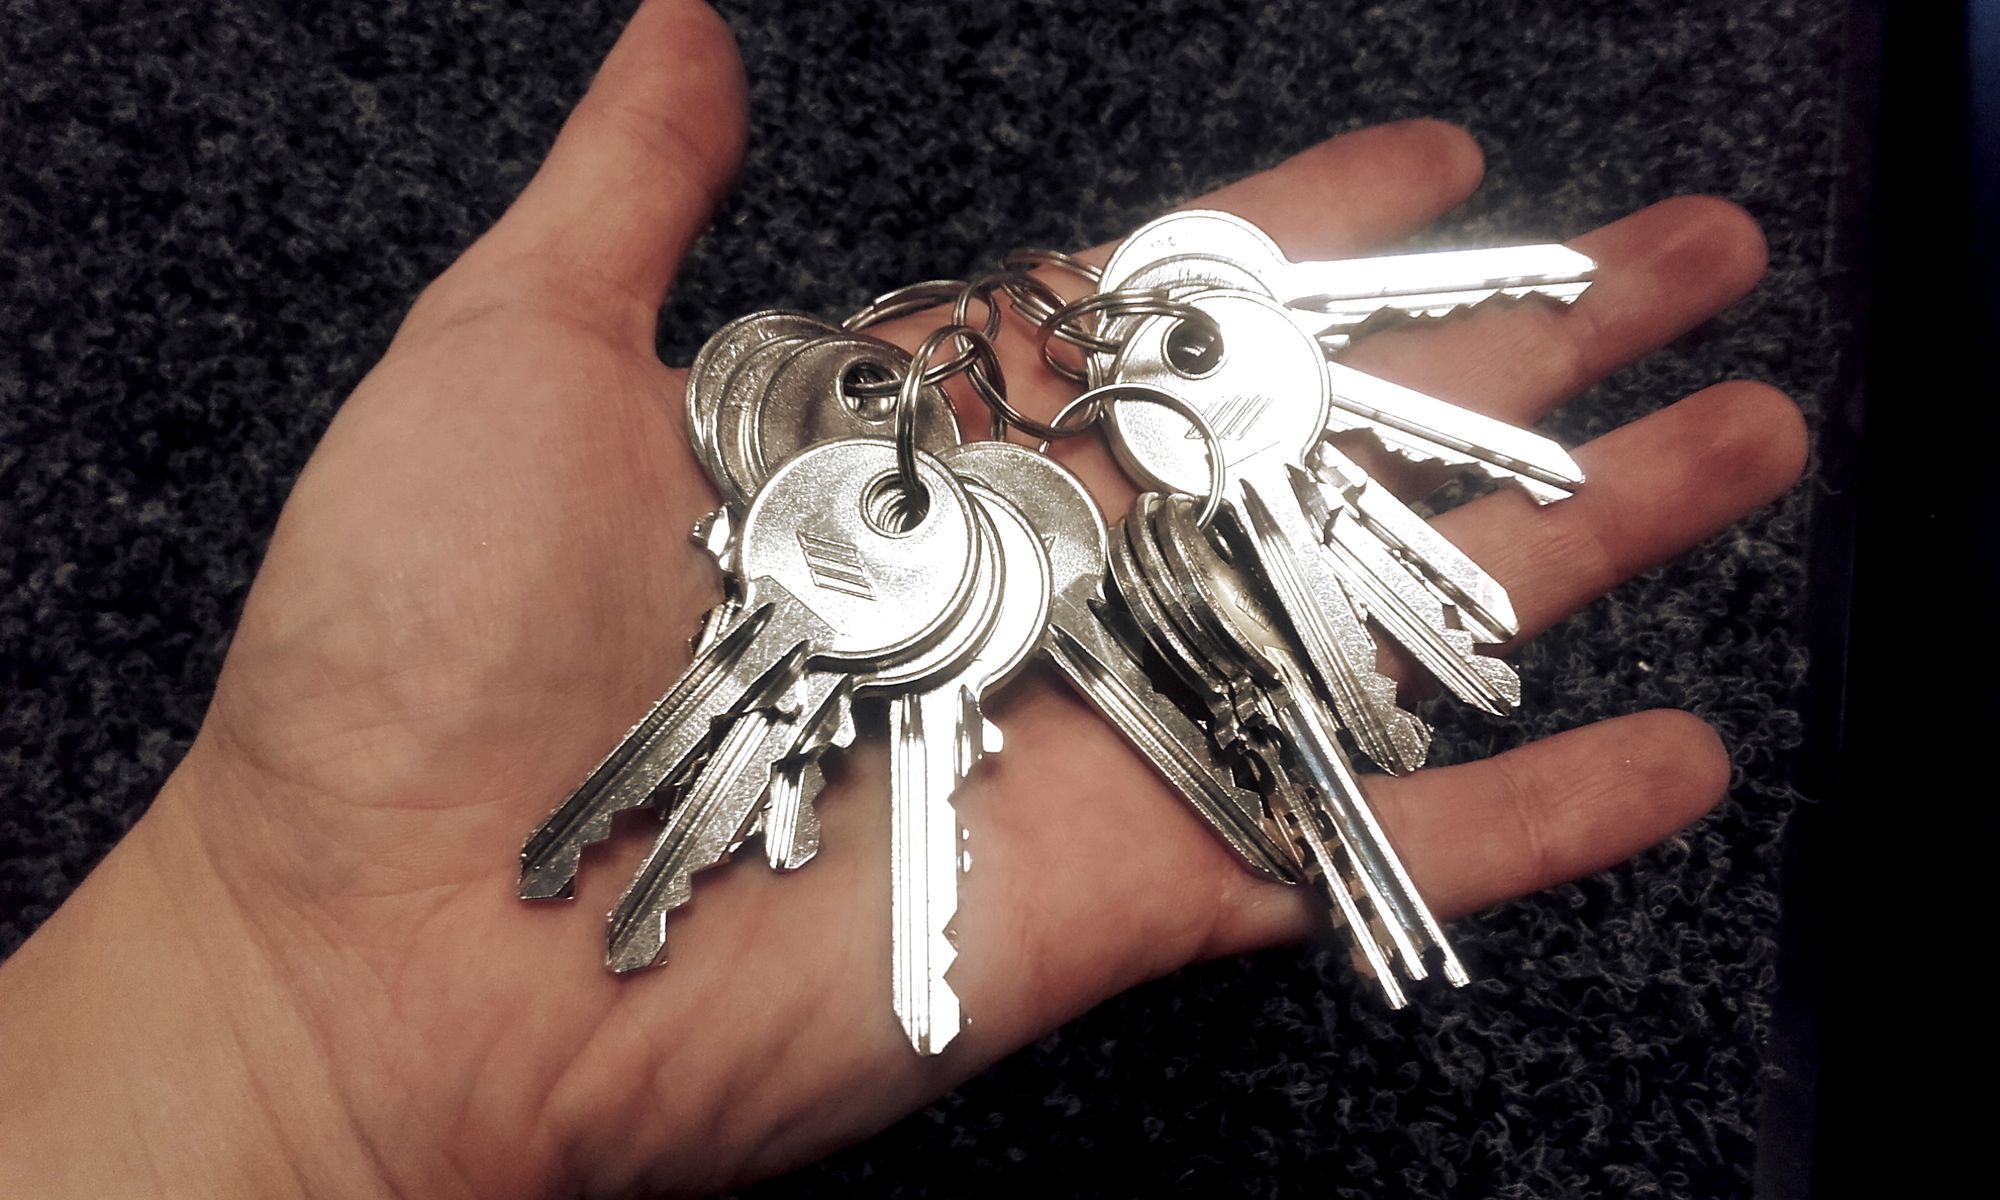 Svazek klíčů